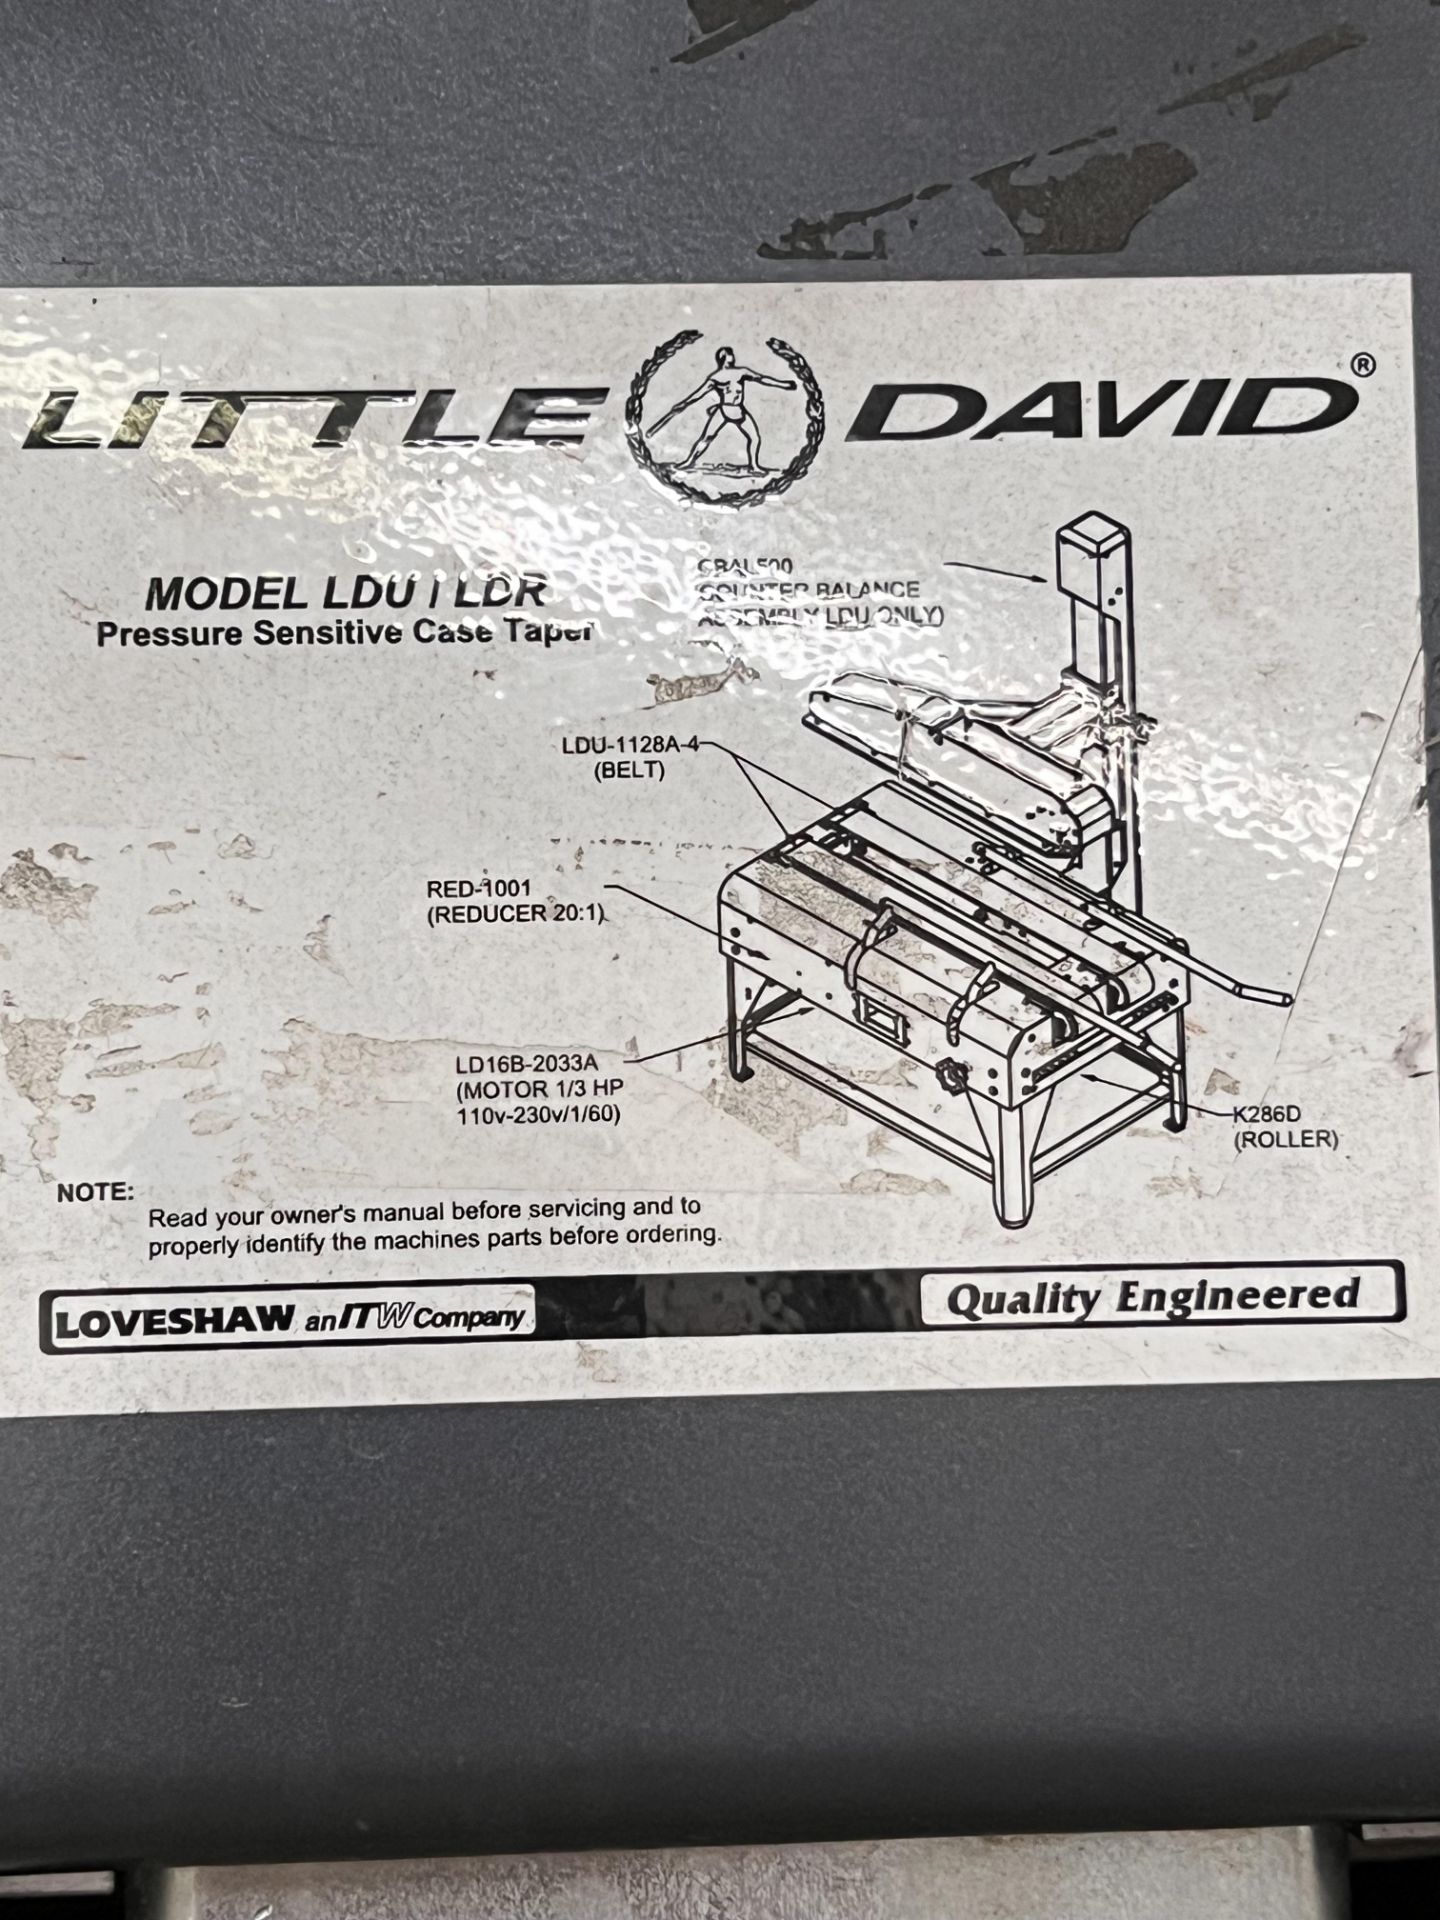 LITTLE DAVID TAPE CASE SEALER, MODEL LDU / LDR, TOP AND BOTTOM TAPER, INCLUDES BOX OF INTERTAPE - Image 8 of 8